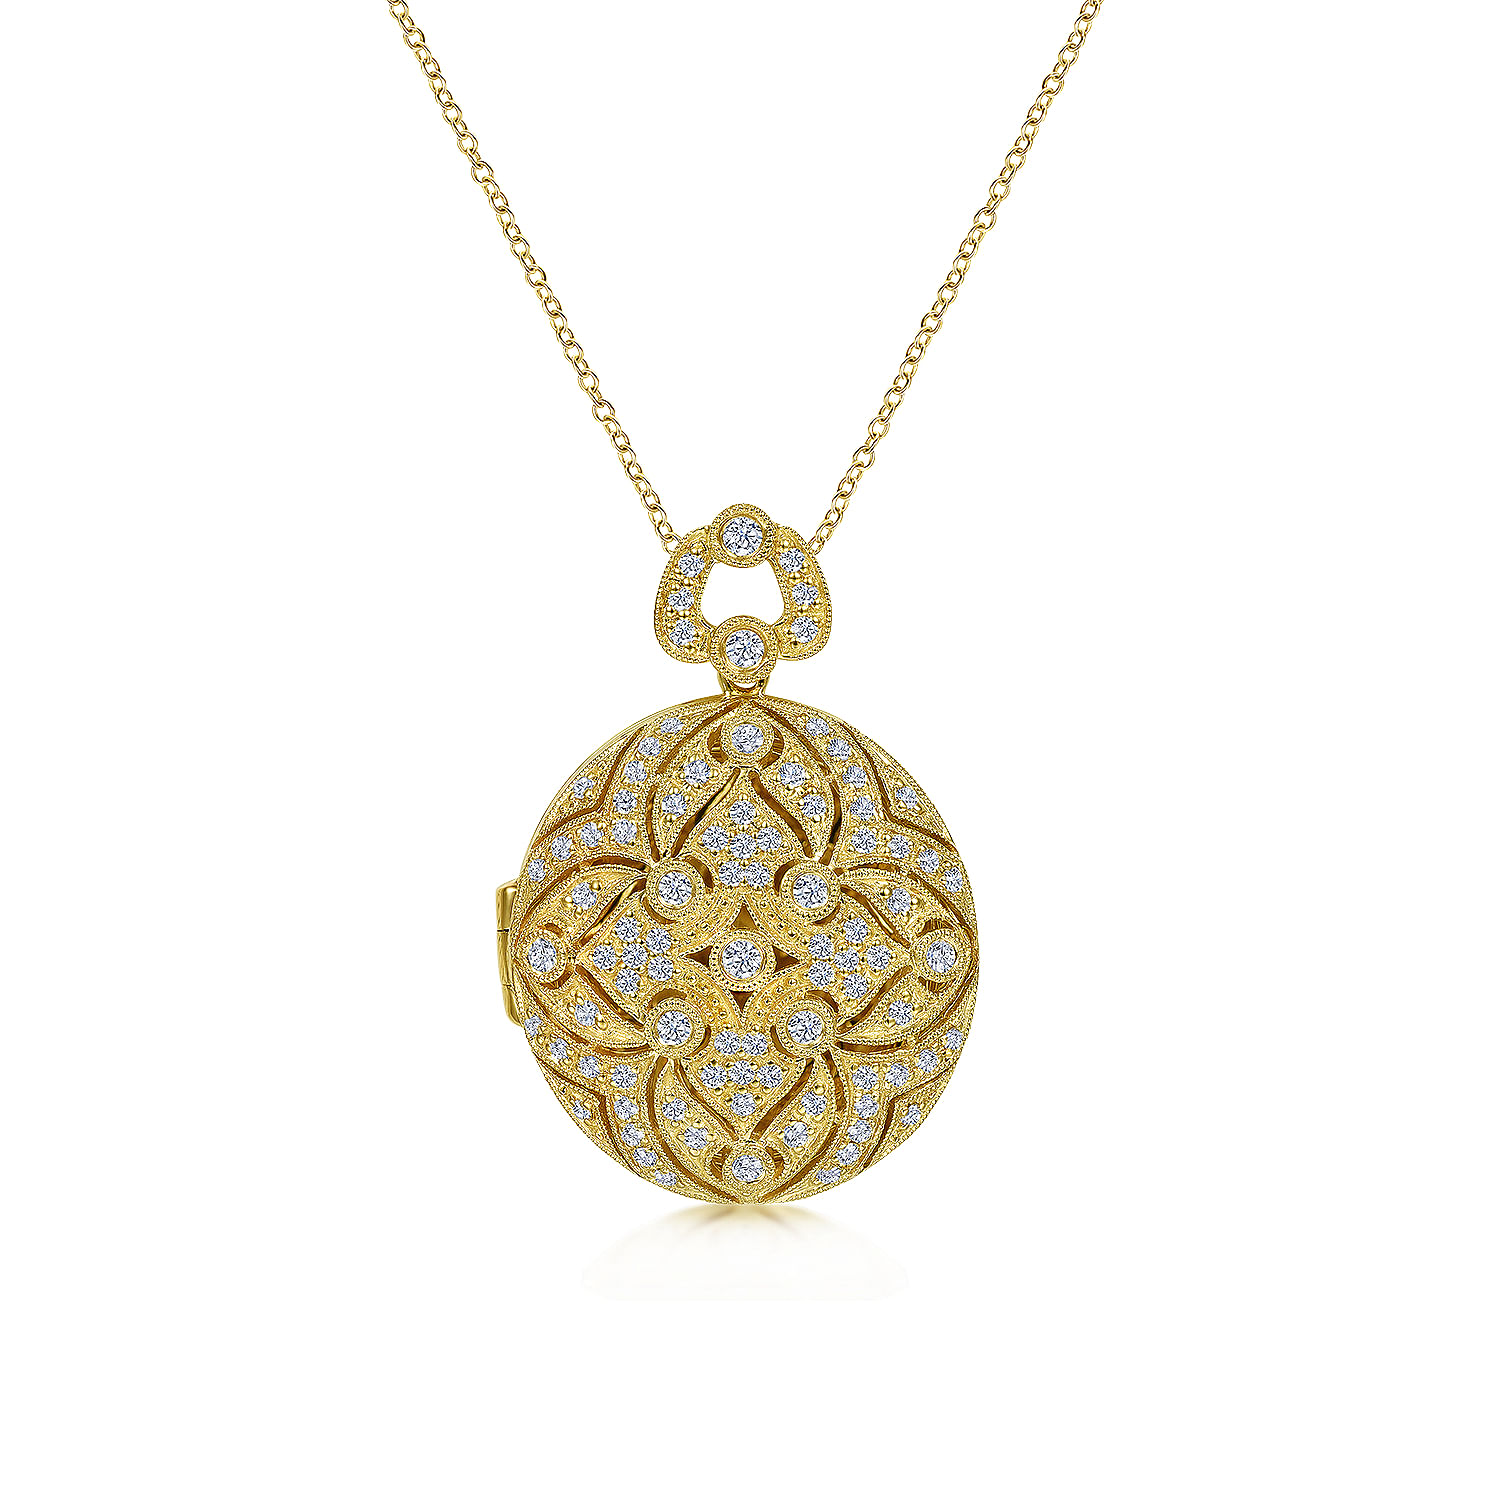 24 inch Vintage Inspired 14K Yellow Gold Round Filigree Diamond Locket Necklace